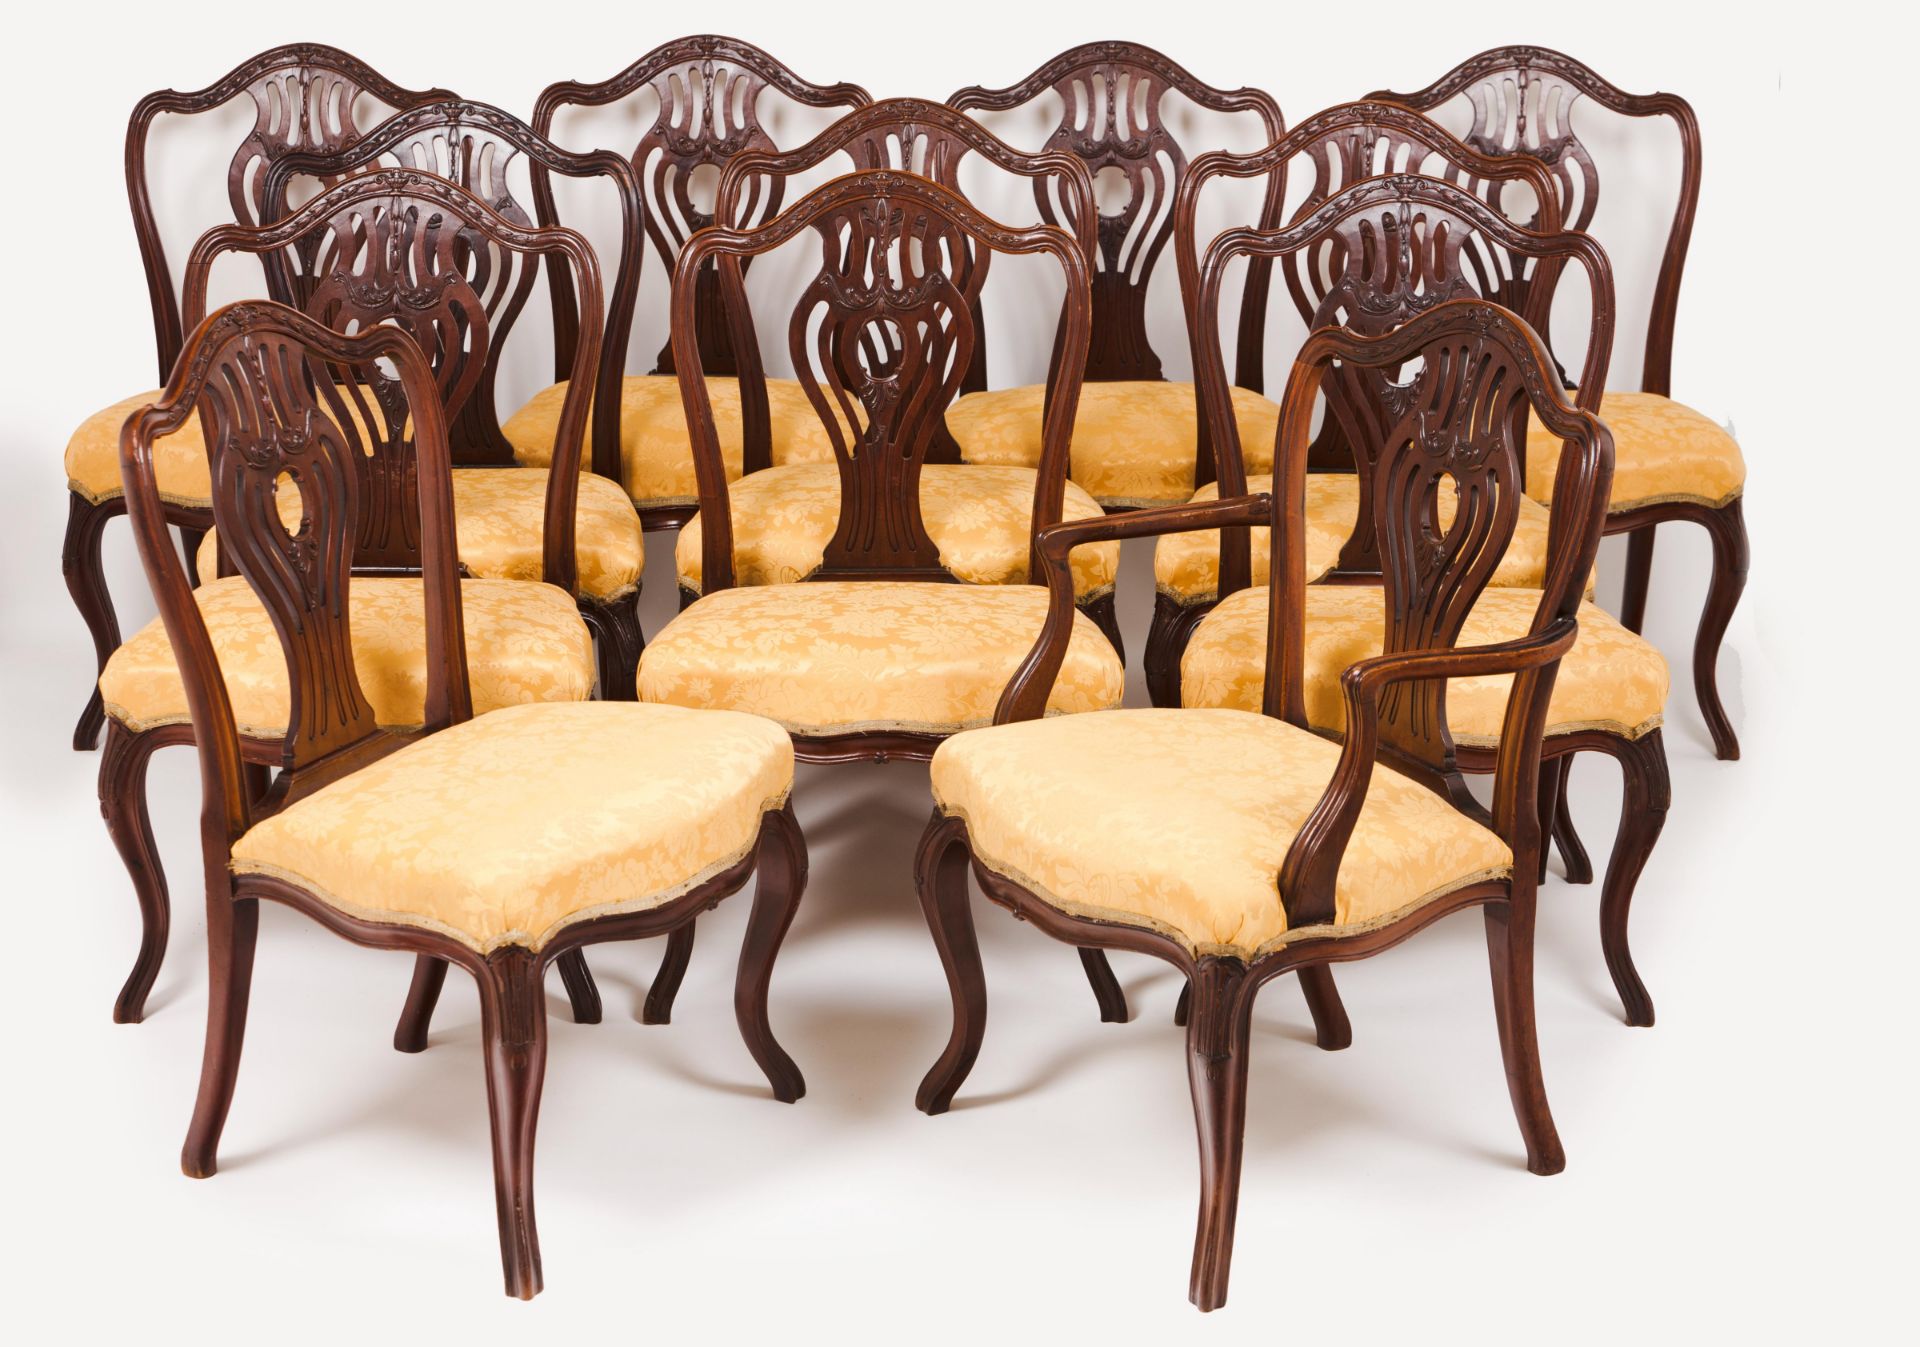 A set of twelve George III chairs